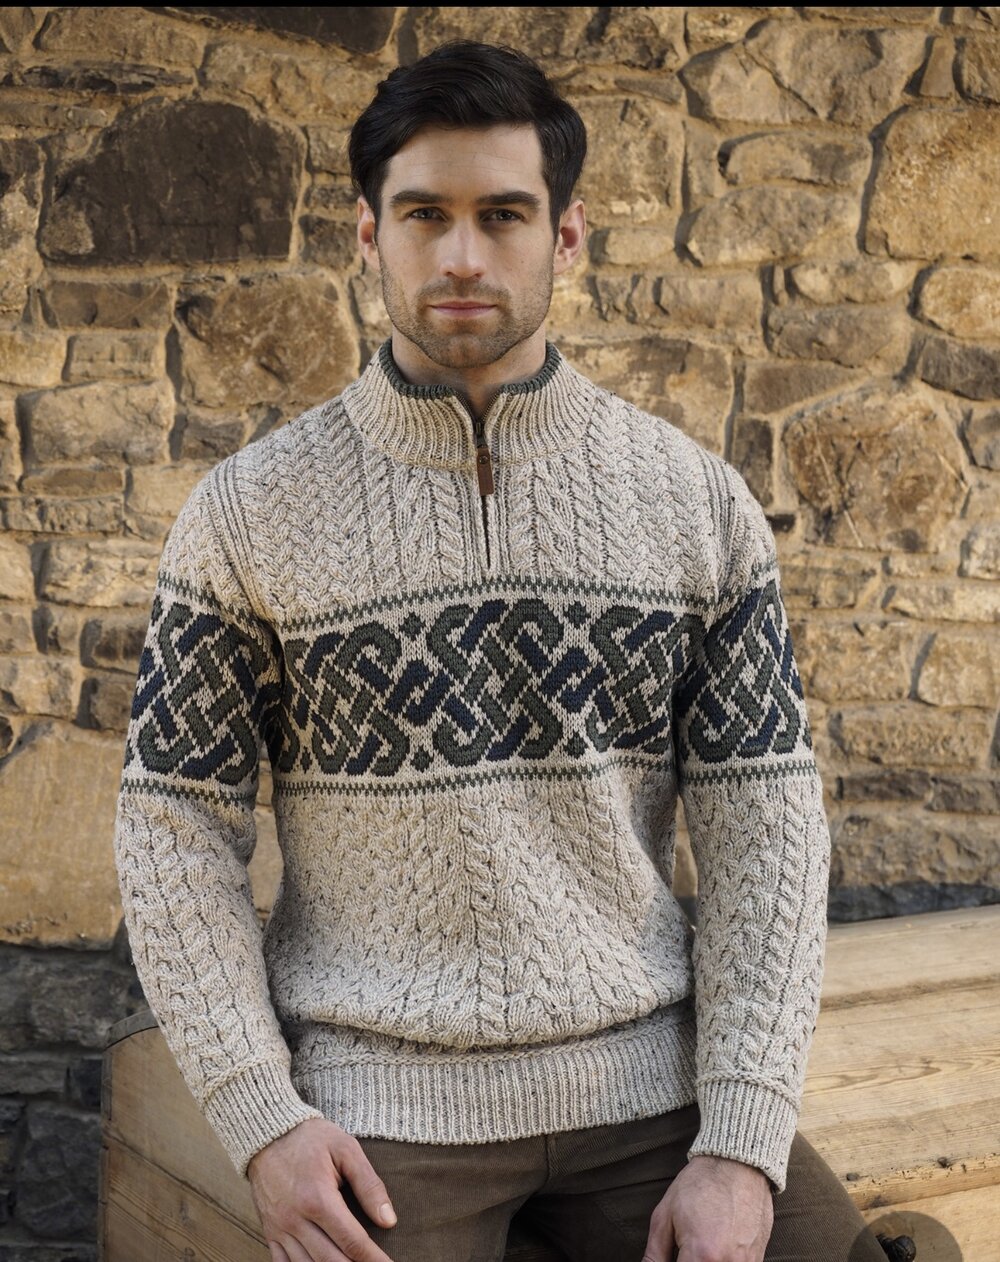 Colorful sweater showcasing intricate Jacquard pattern